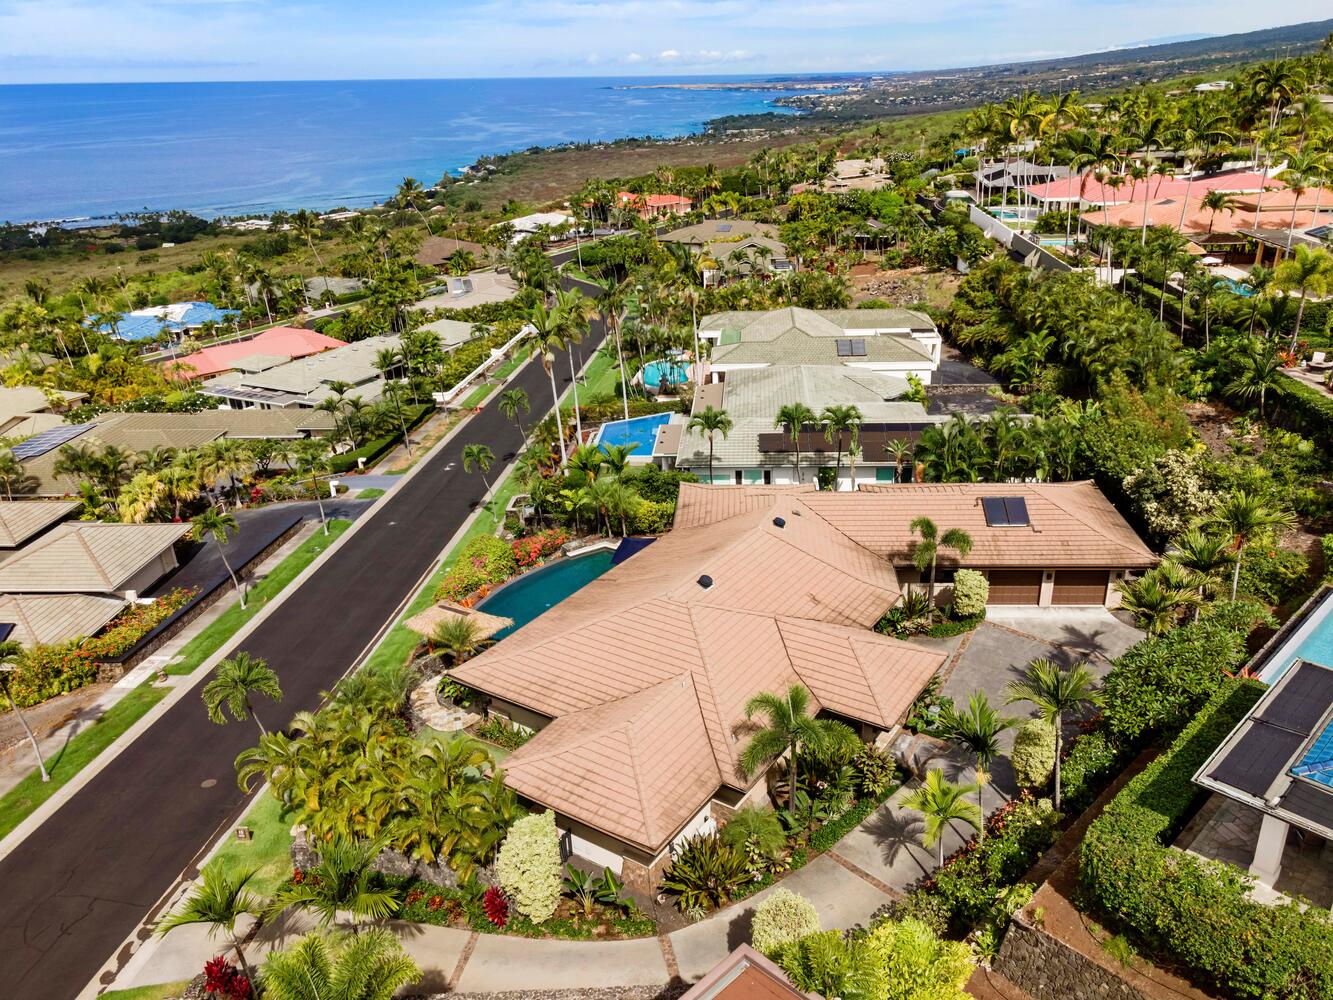 Kailua Kona Vacation Rentals, Island Oasis - Bird's eye view of the home